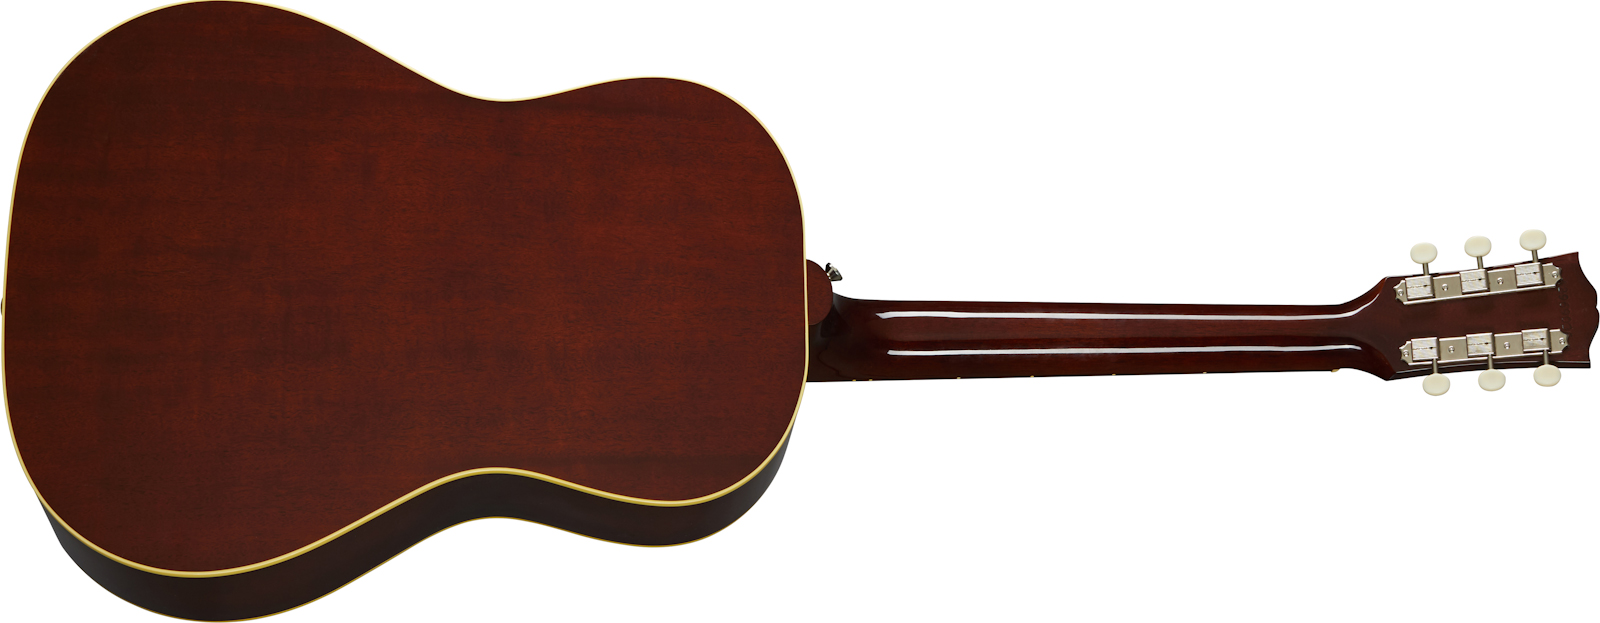 Gibson 50s Lg-2 2020 Auditorium Epicea Acajou Rw - Vintage Sunburst - Guitare Electro Acoustique - Variation 1